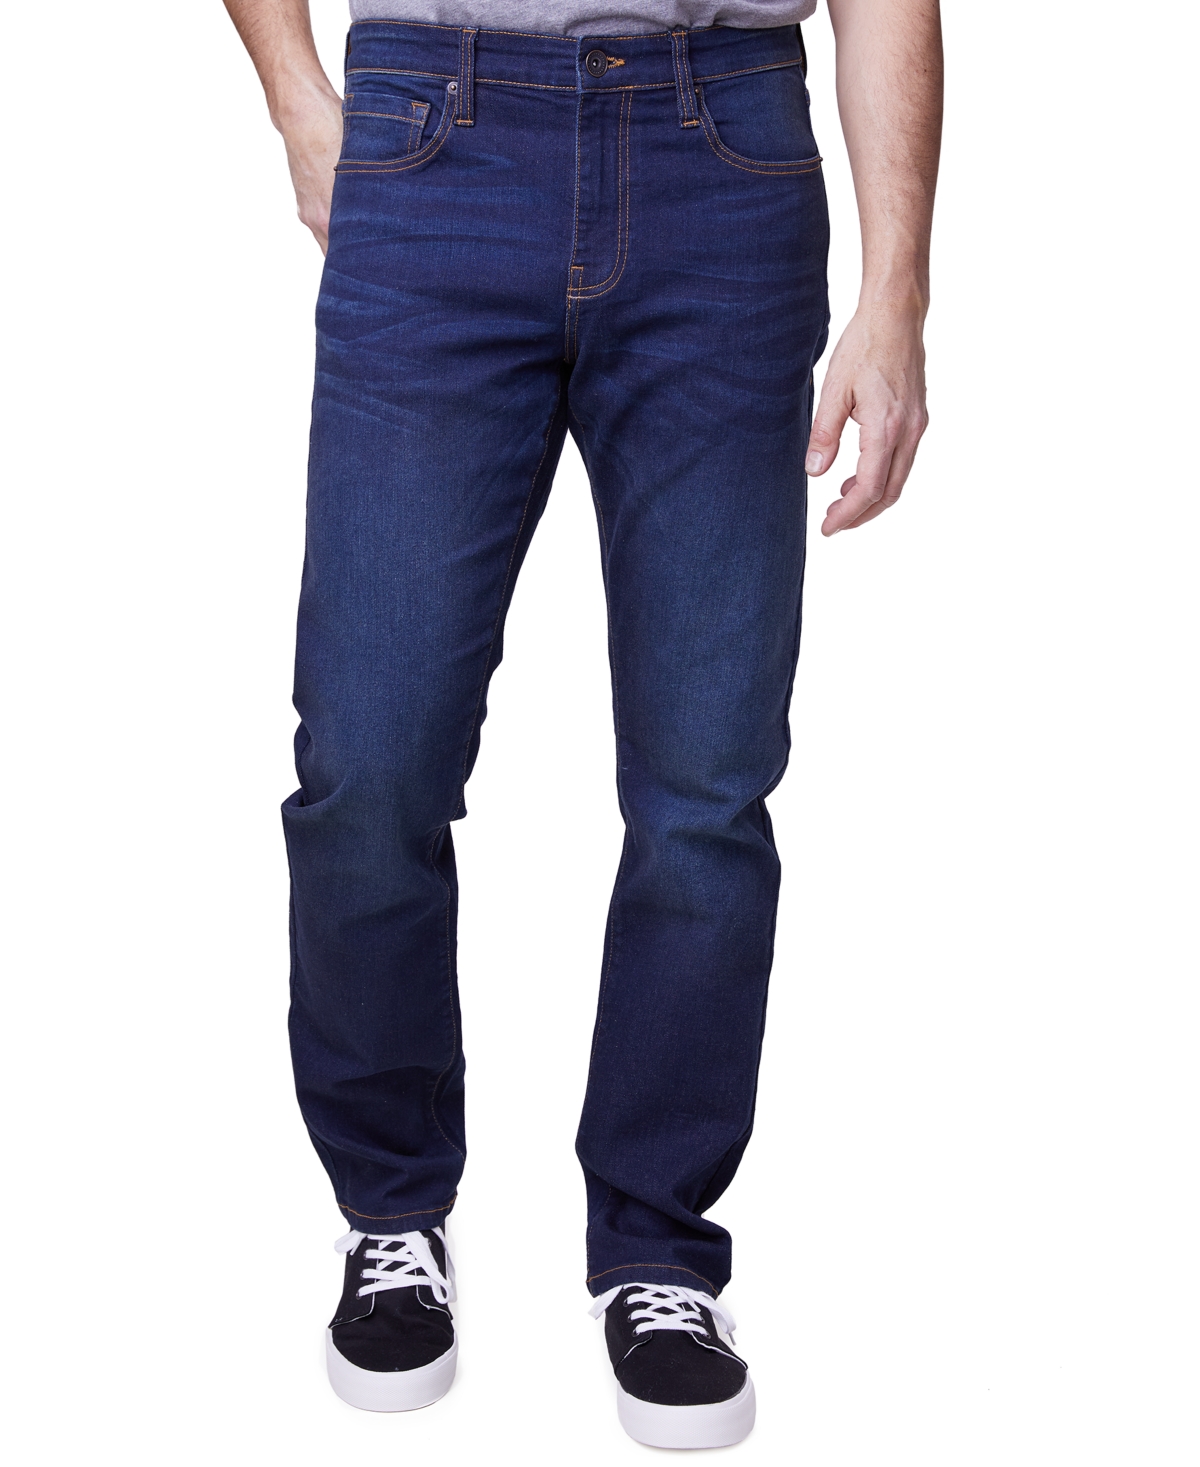 Men's Slim-Fit Stretch Jeans - Tim